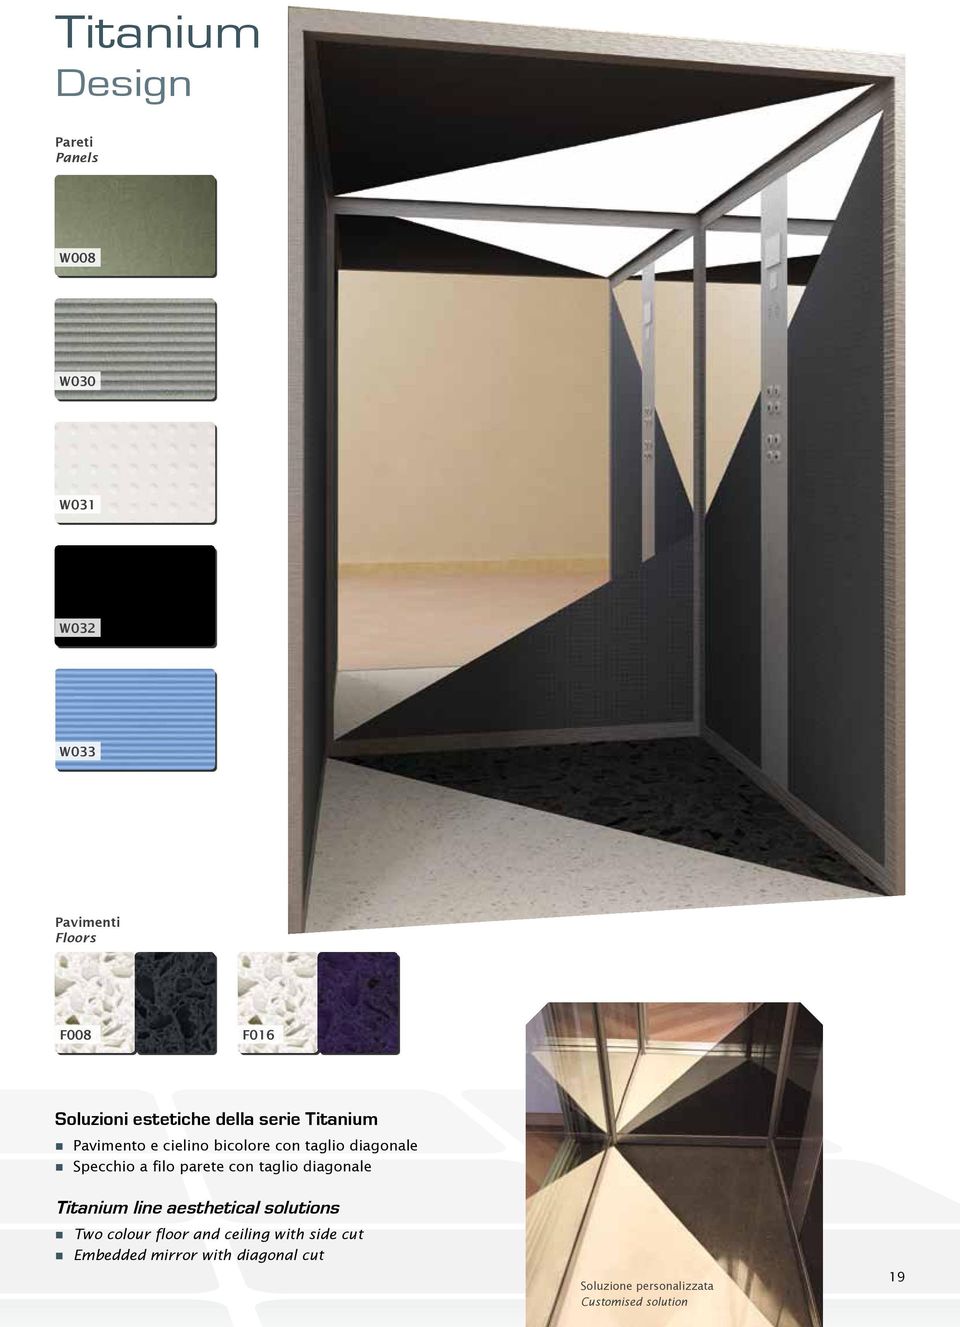 filo parete con taglio diagonale Titanium line aesthetical solutions Two colour floor and